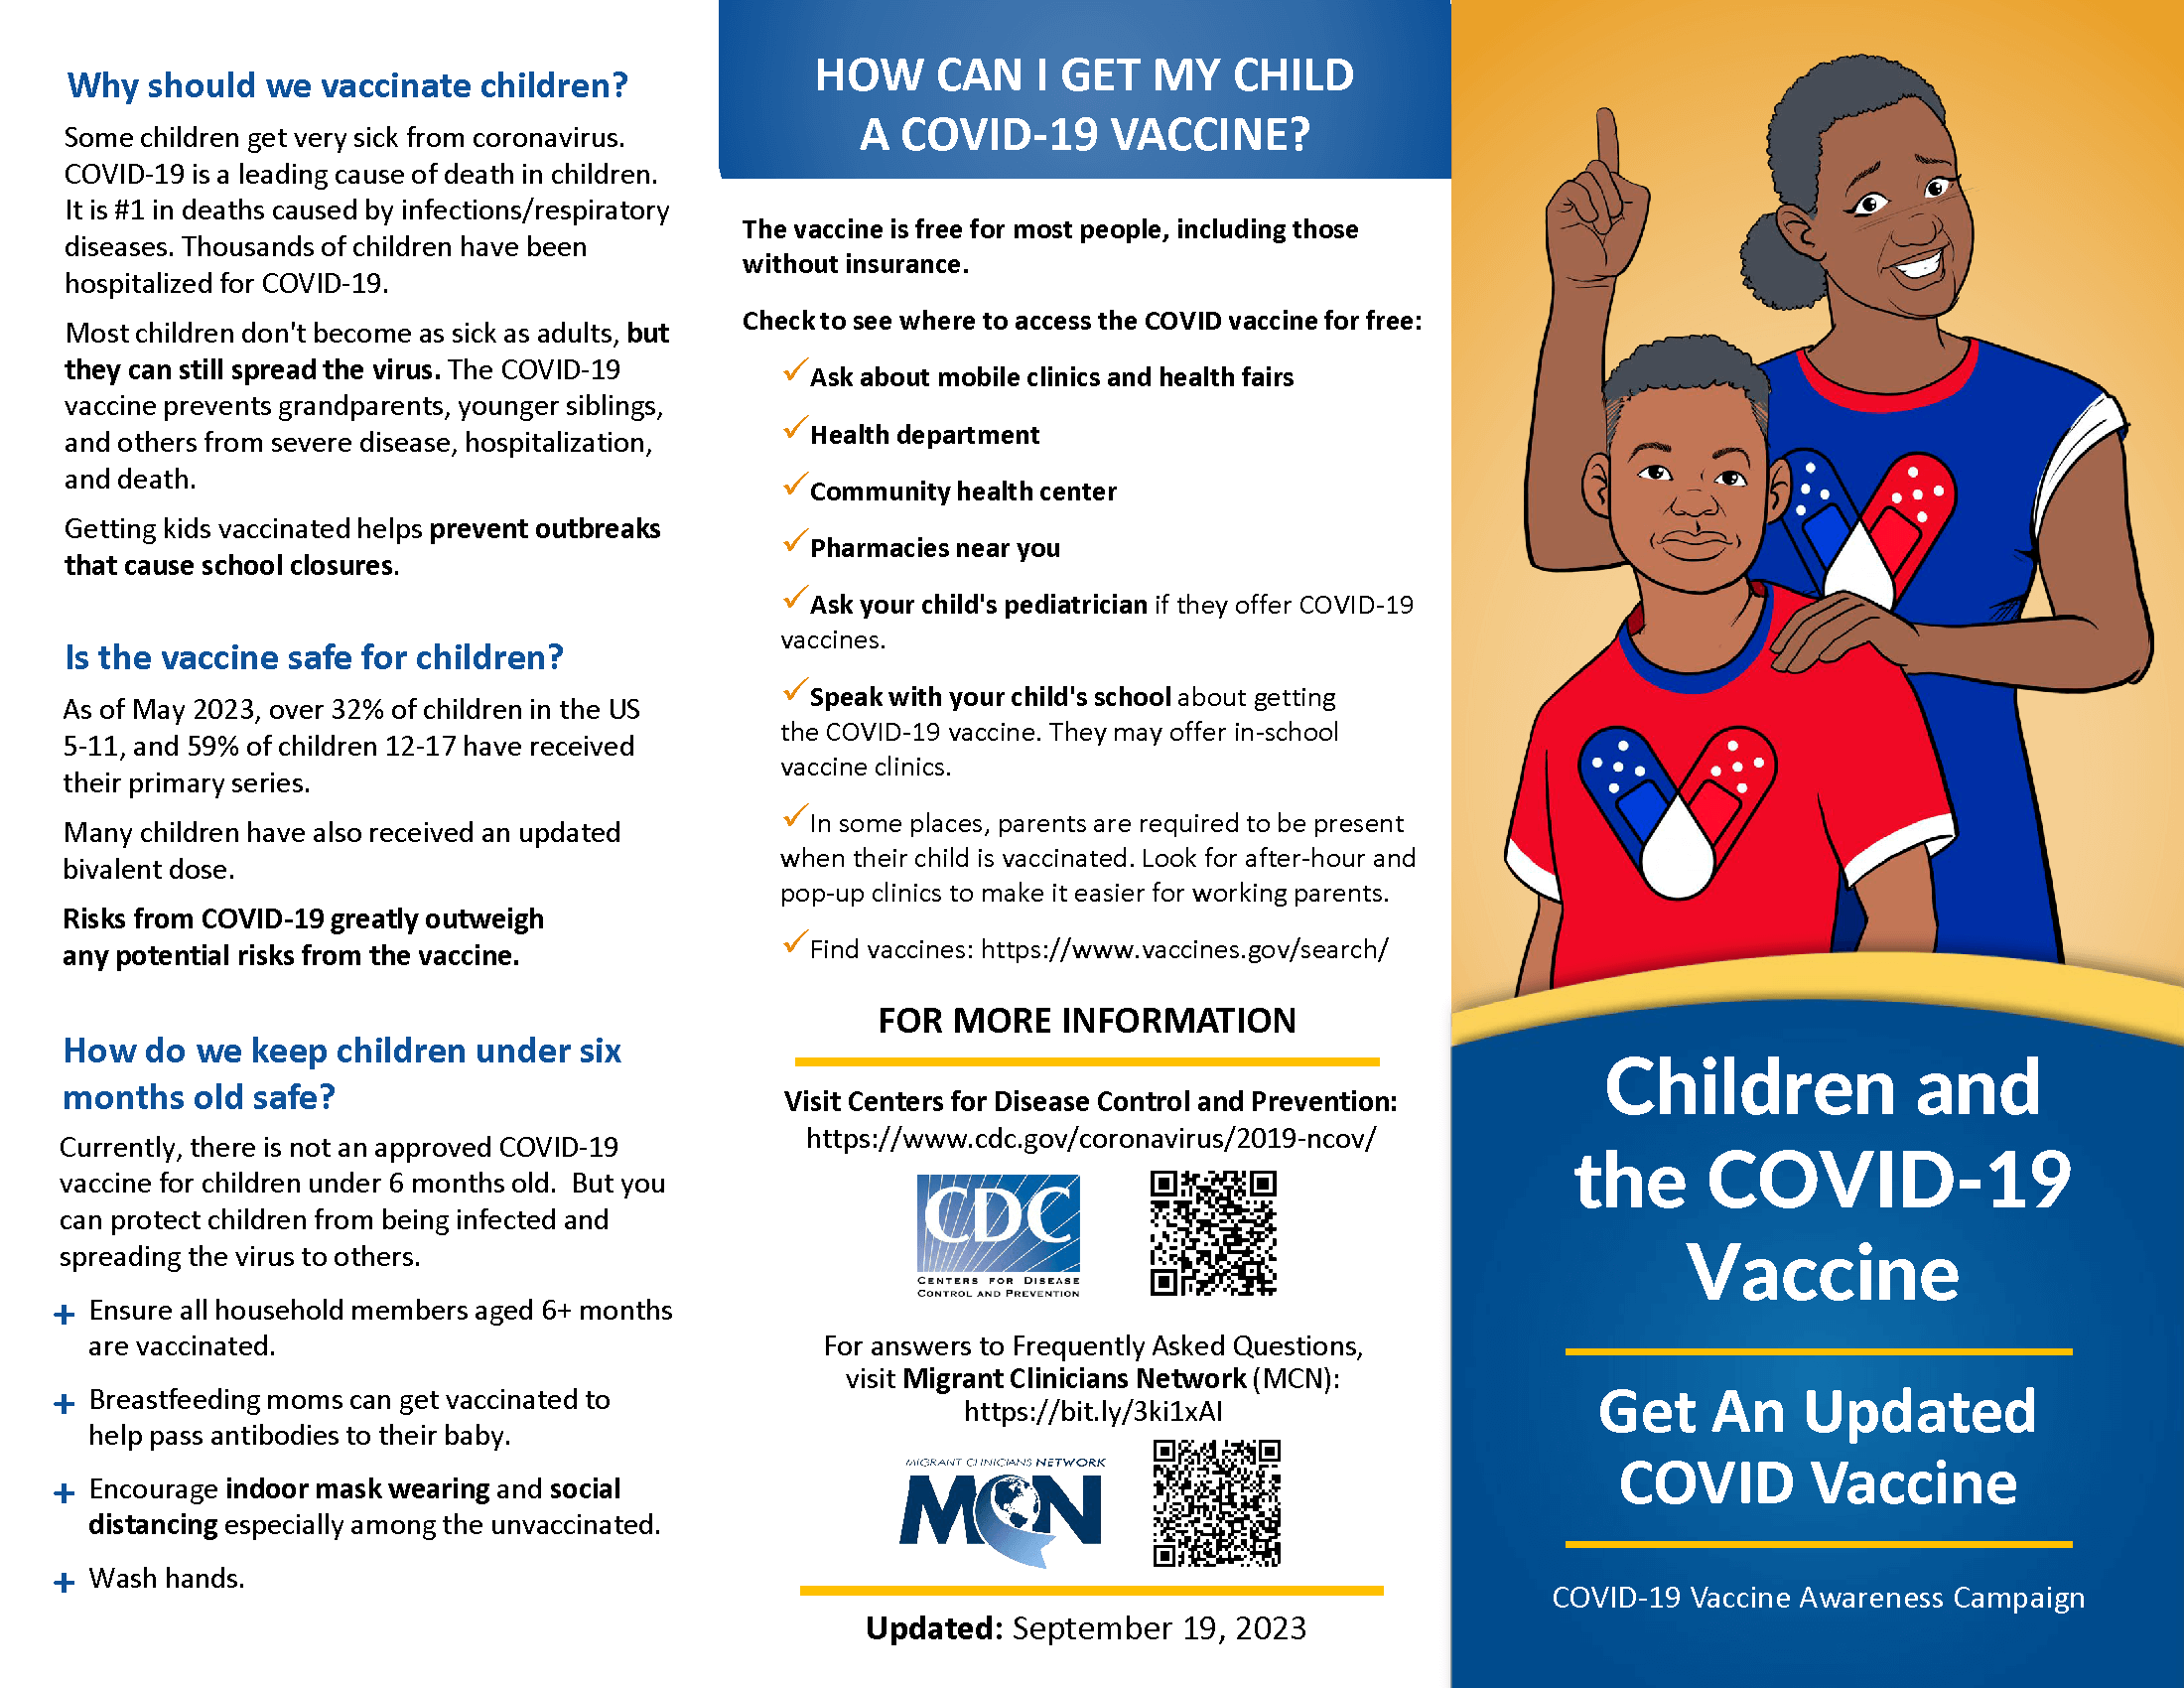 Children and the COVID-19 Vaccine